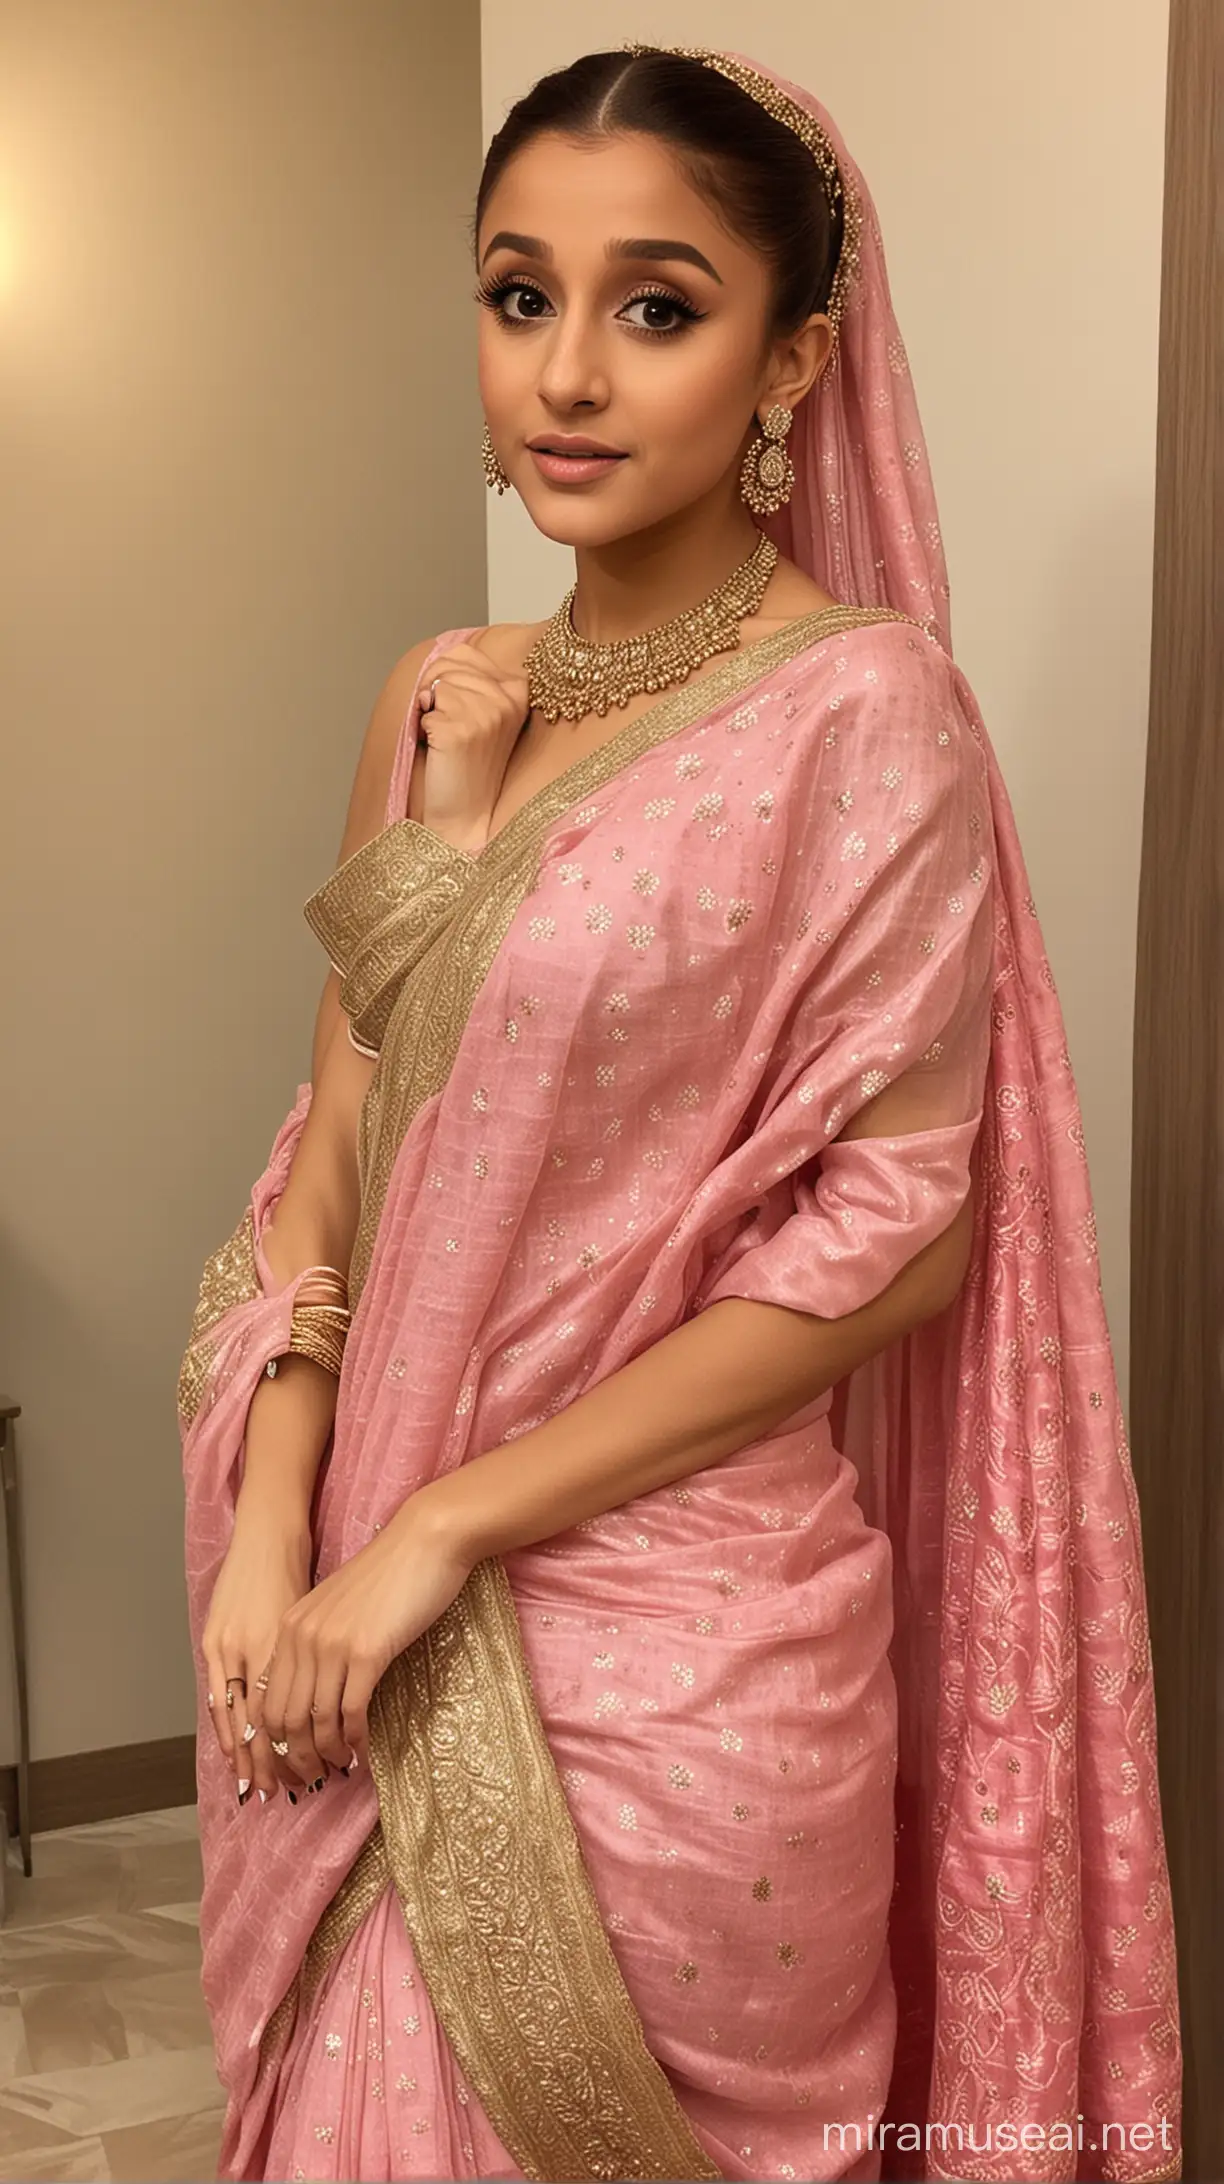 Ariana Grande Stunningly Adorned in Elegant Traditional Indian Saree